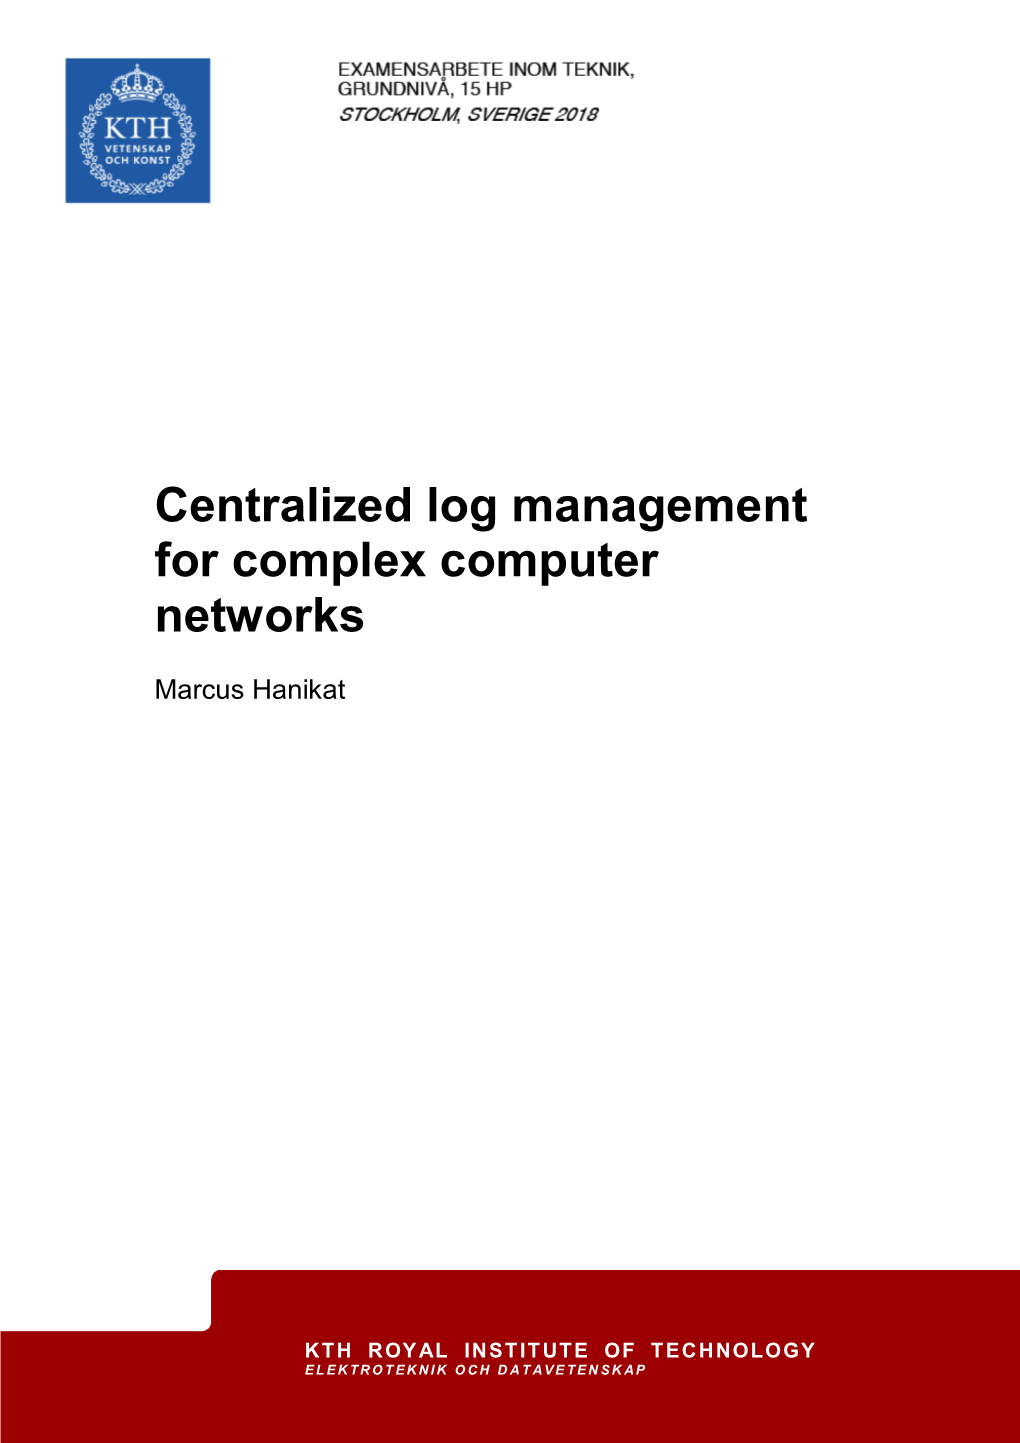 Centralized Log Management for Complex Computer Networks